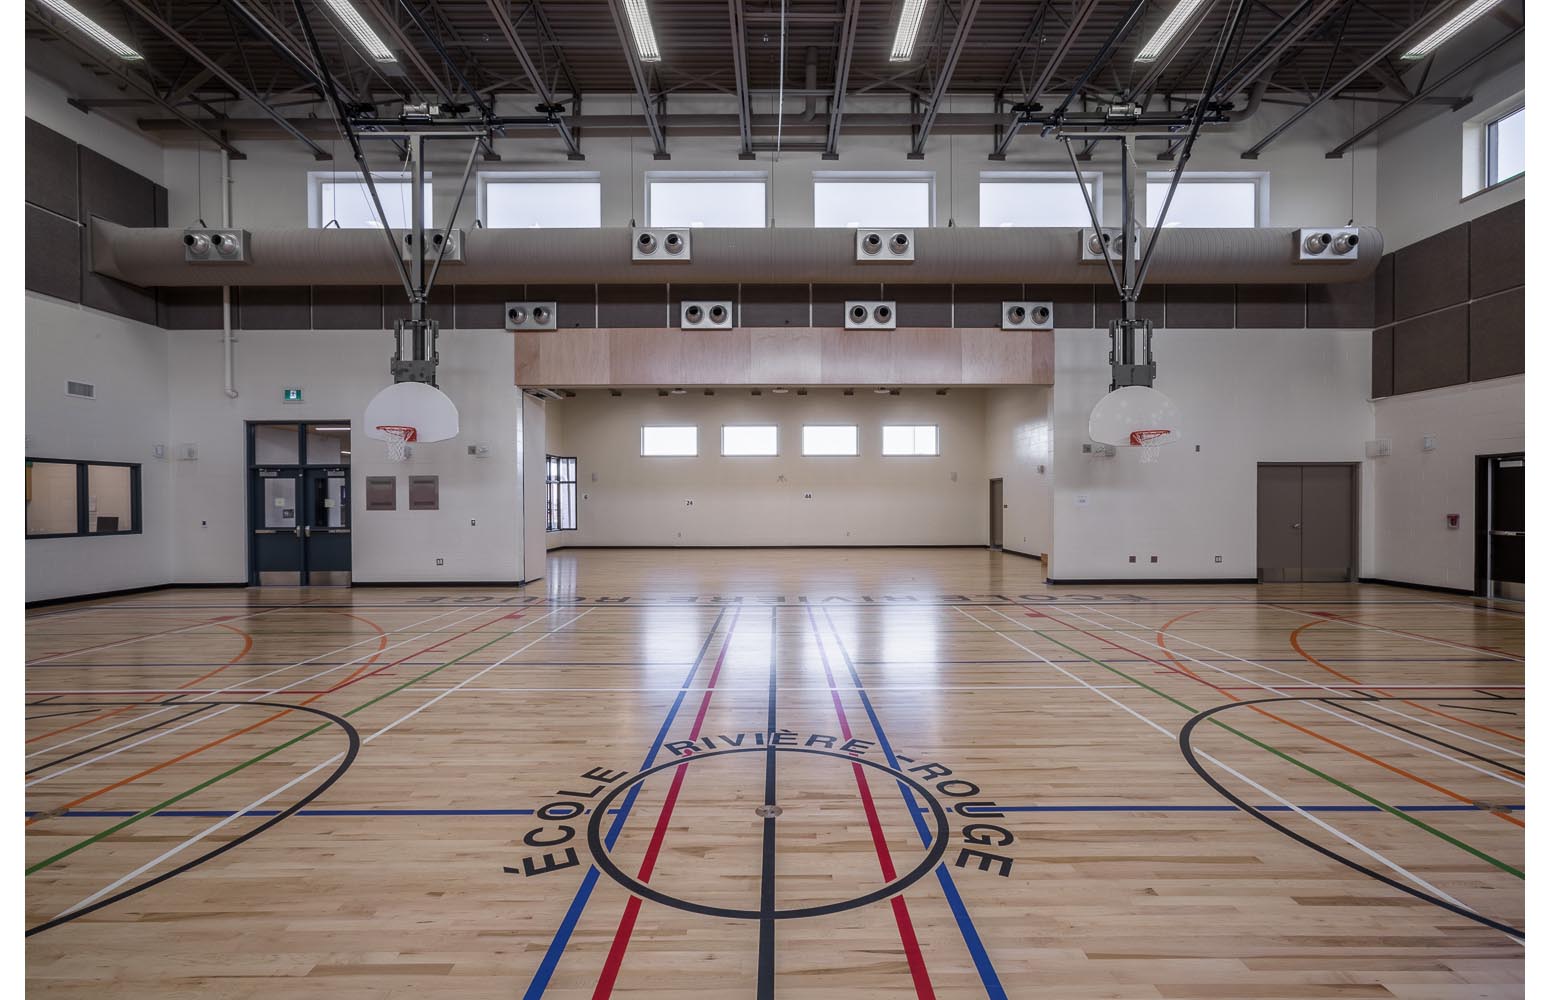  Ecole Rivière Rouge Elementary, interior photo of gymnasium / Photo:  Lindsay Reid  